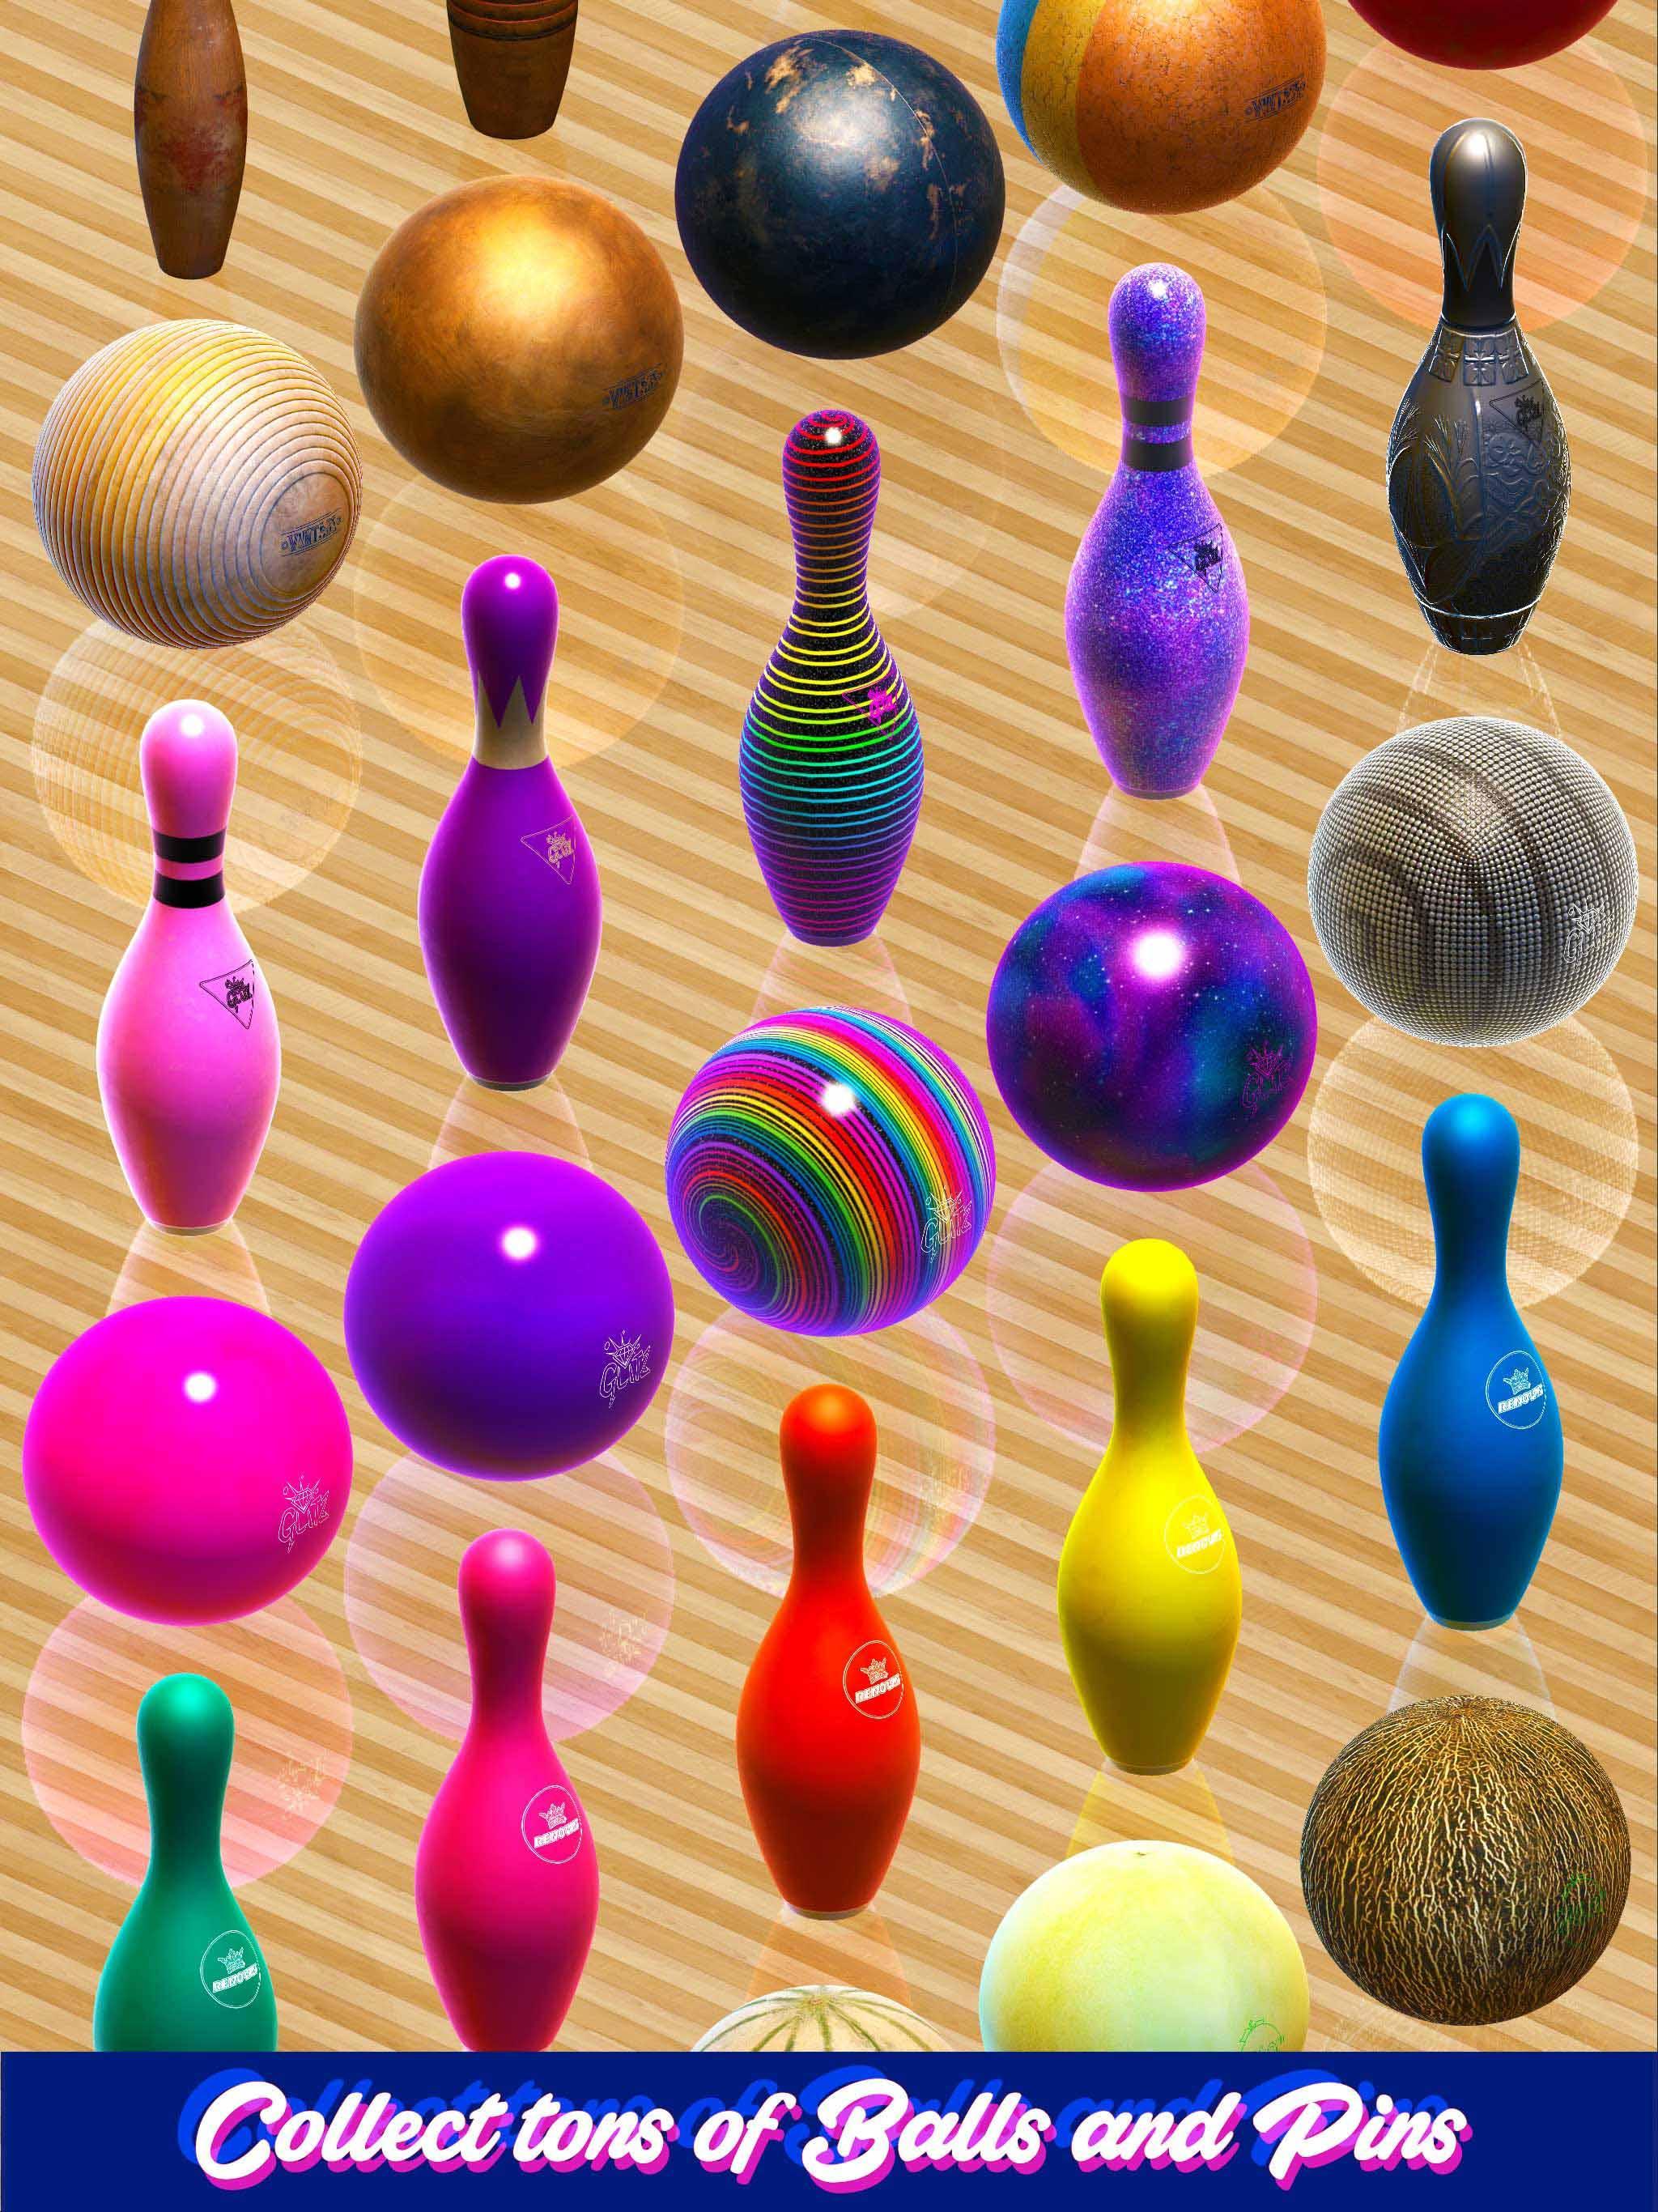 Bowling Go! - Best Realistic 10 Pin Bowling Games 0.3.0.1512 Screenshot 7